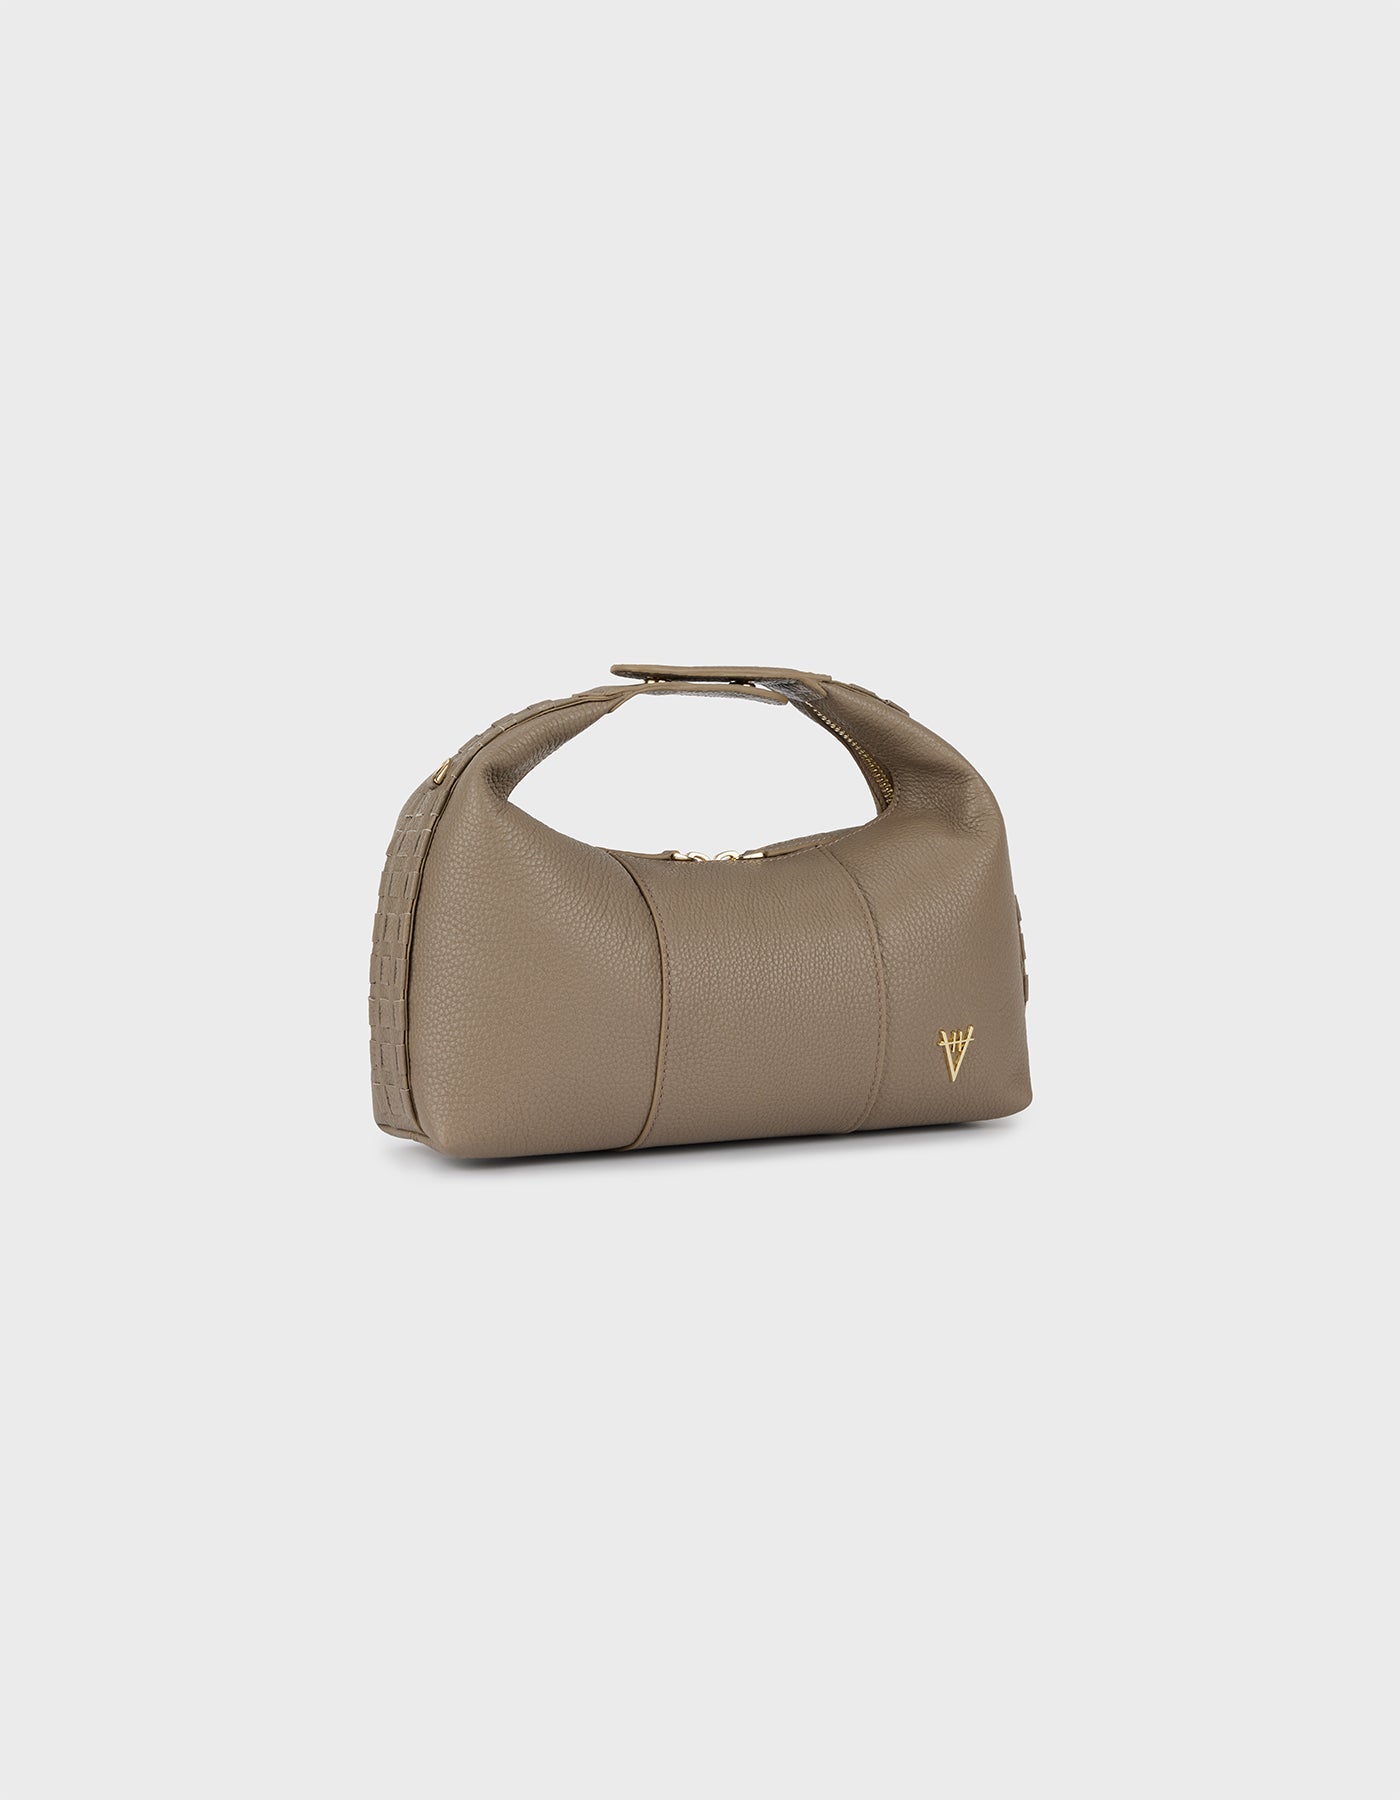 HiVa Atelier | Midi Croissant Bag Mink | Beautiful and Versatile